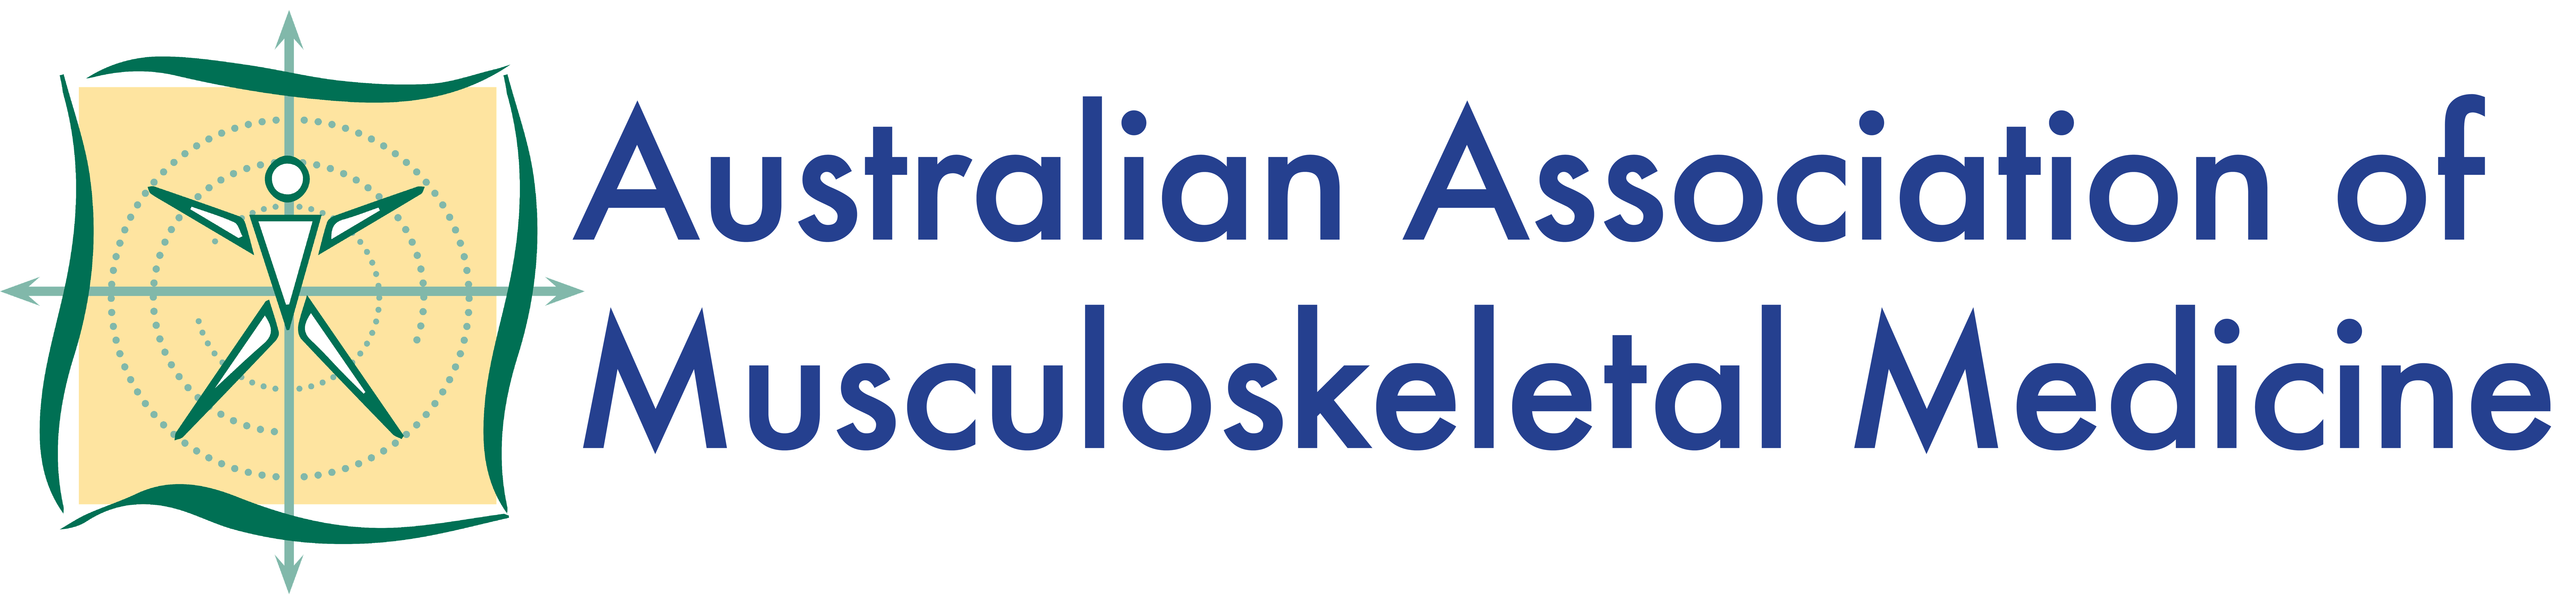 Australian Association of Musculoskeletal Medicine (AAMM)